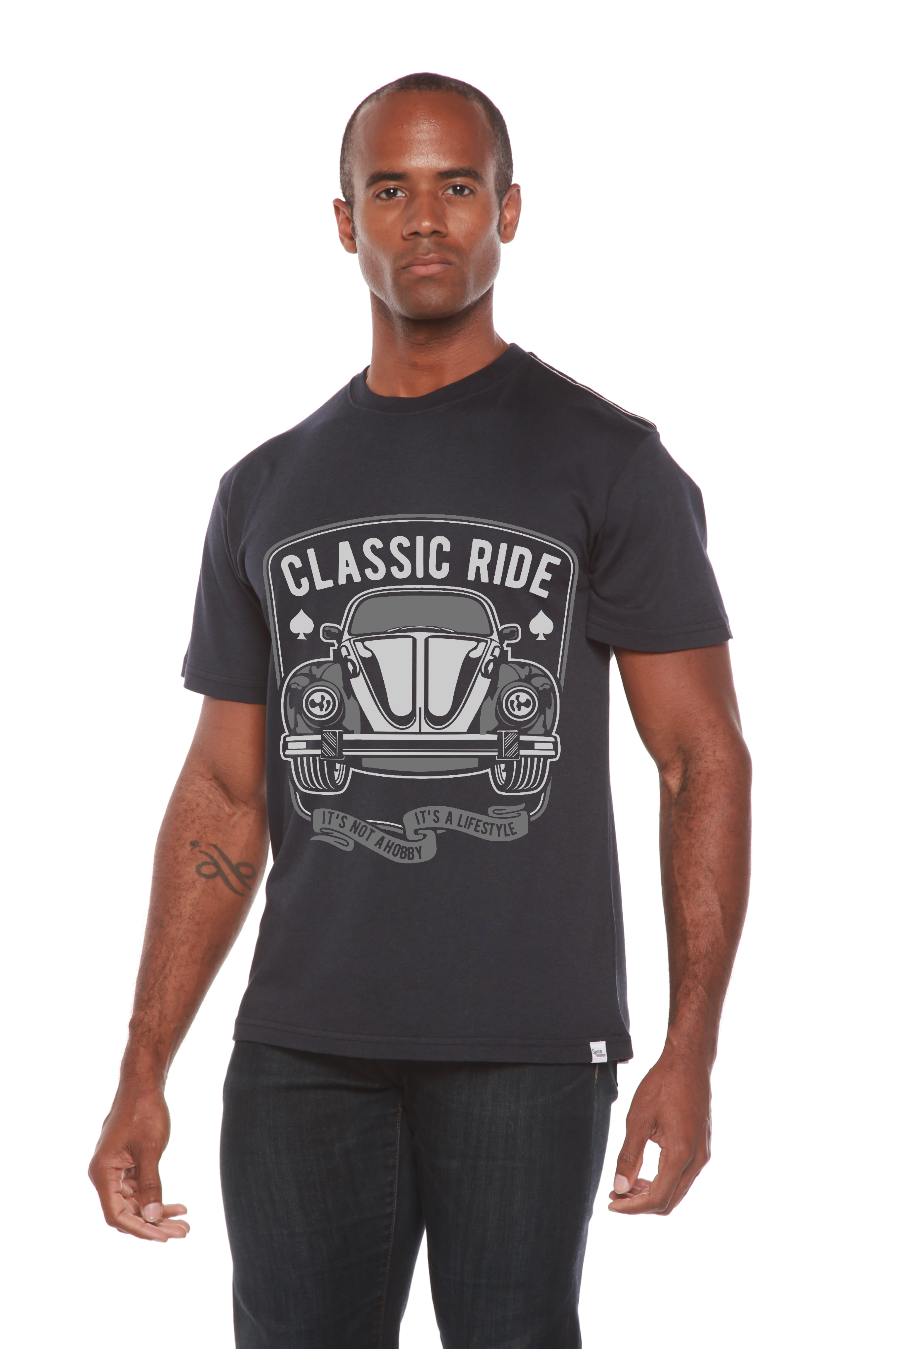 Classic Ride Men's Bamboo Viscose/Organic Cotton Short Sleeve T-Shirt - Spun Bamboo